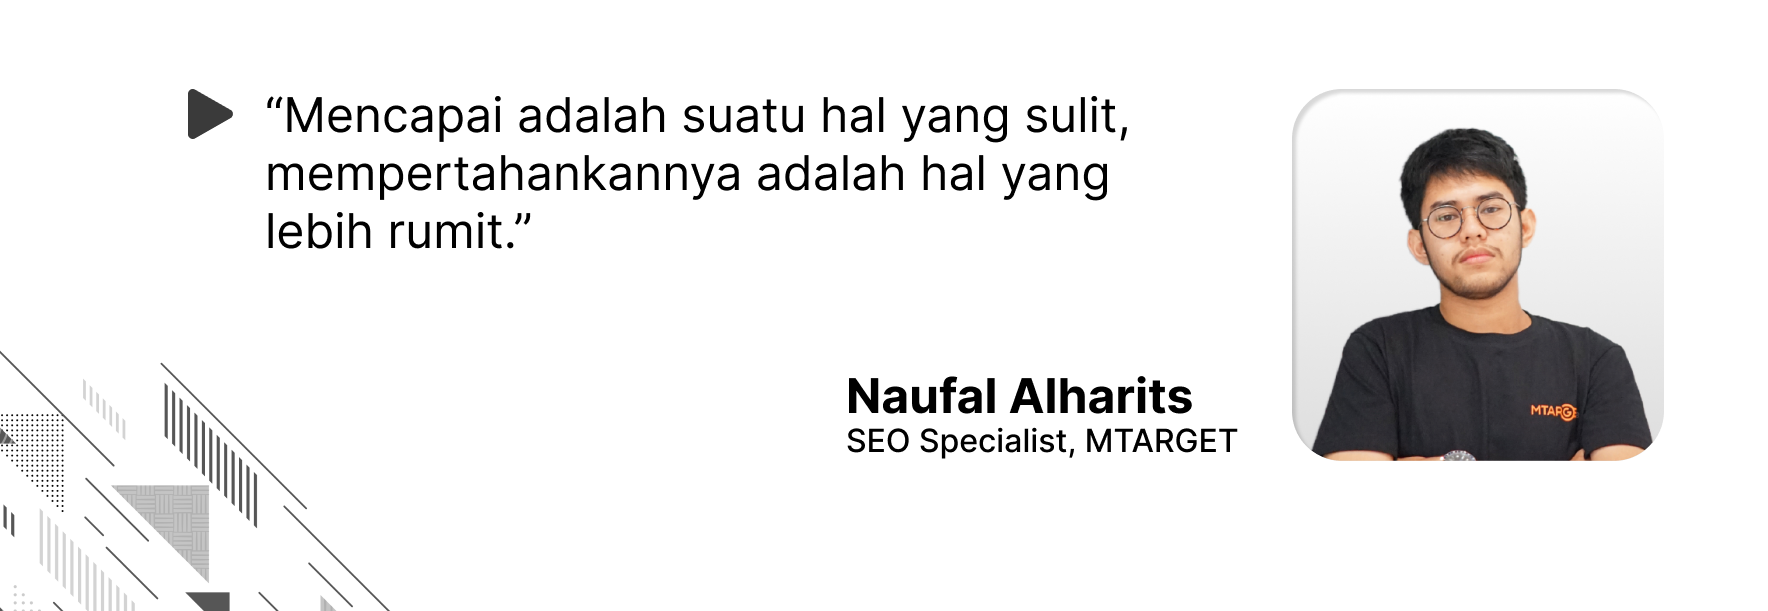 Quote oleh Naufal Alharits mengenai proses mencapai dan mempertahankan sesuatu